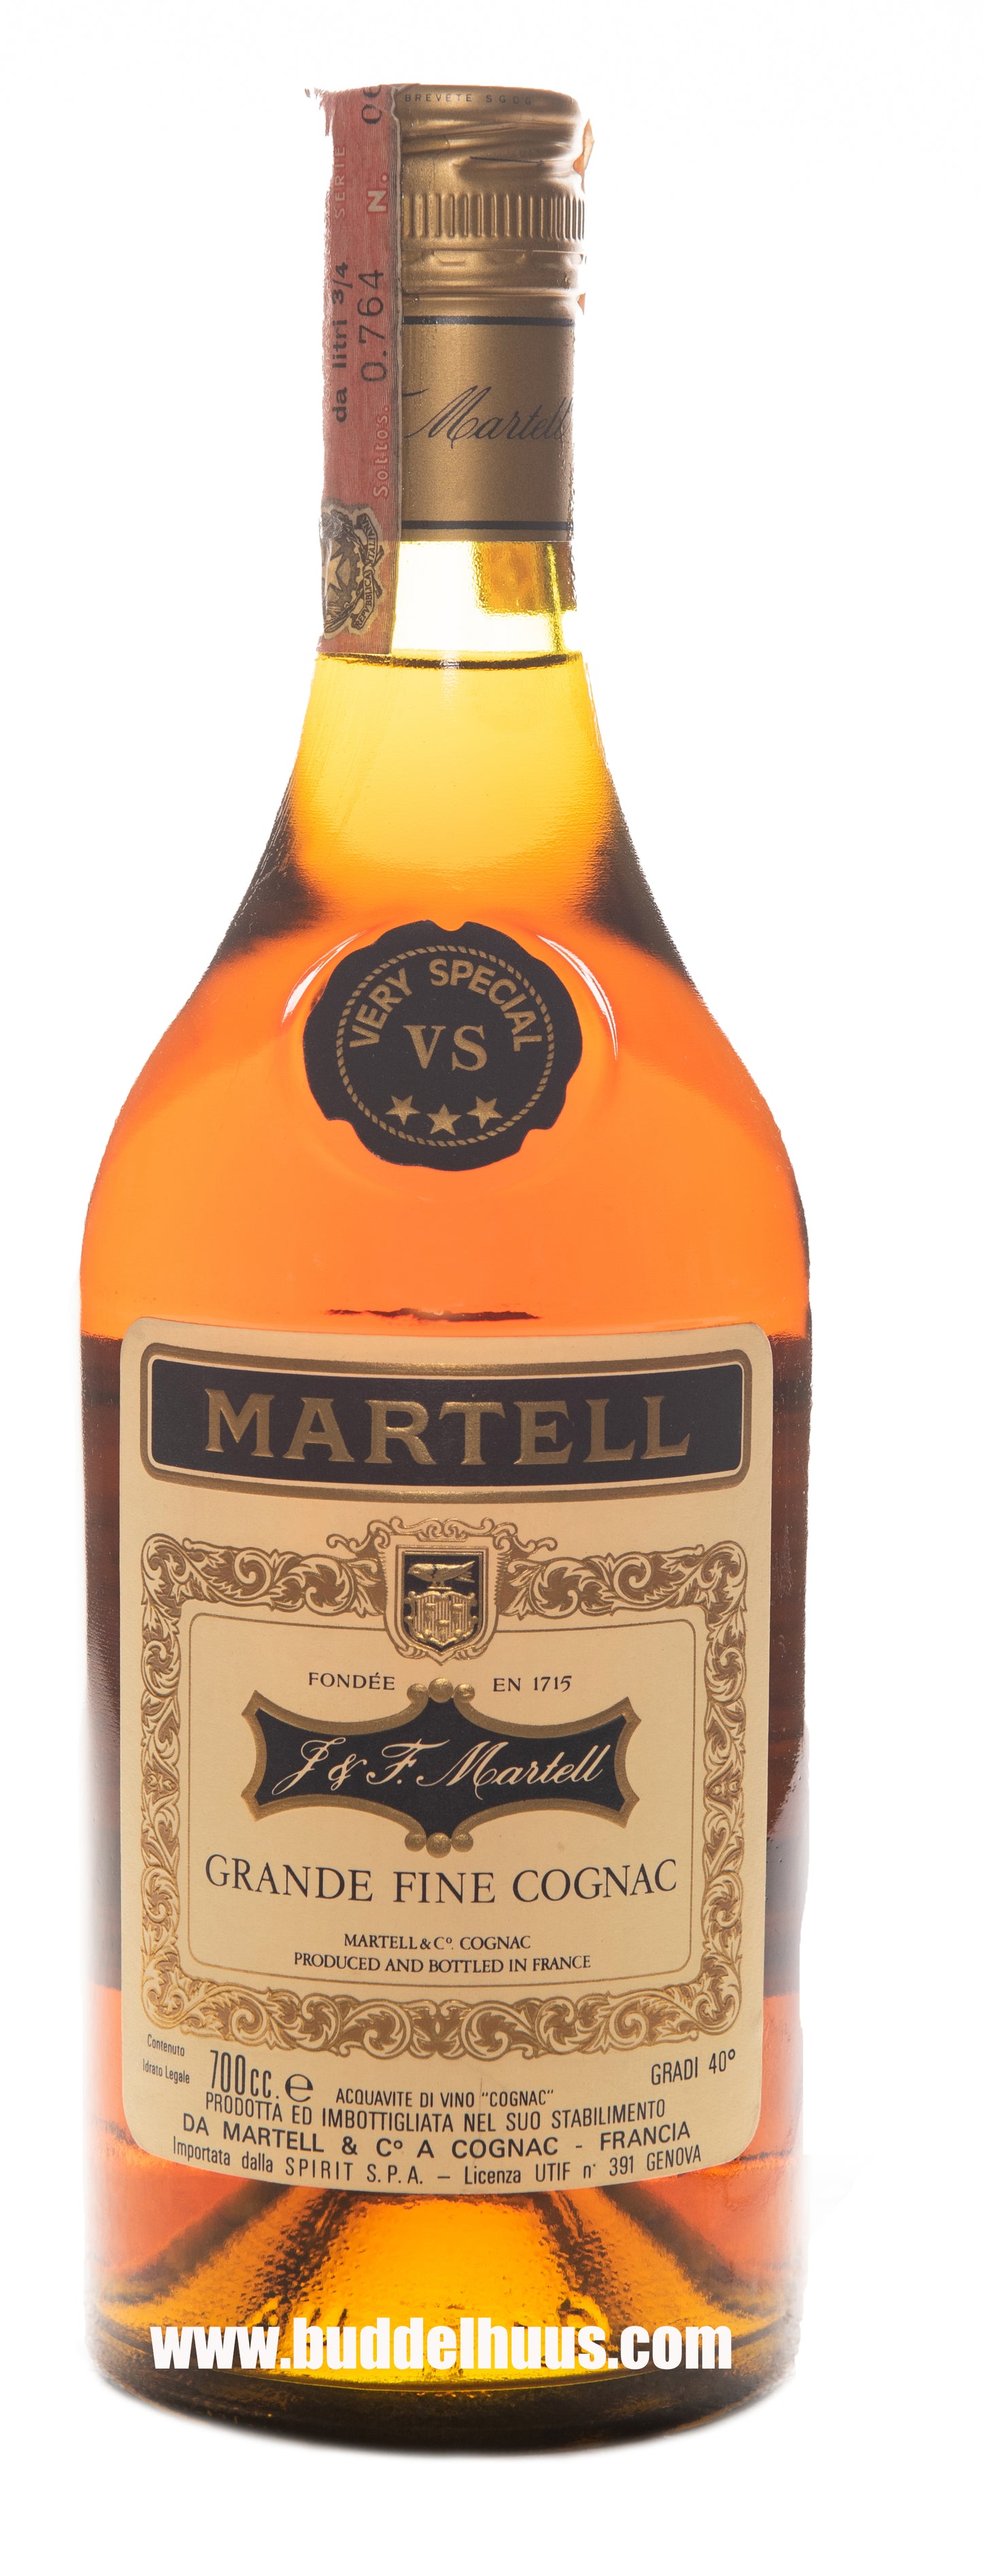 Martell VS Grande Fine Cognac 1970s